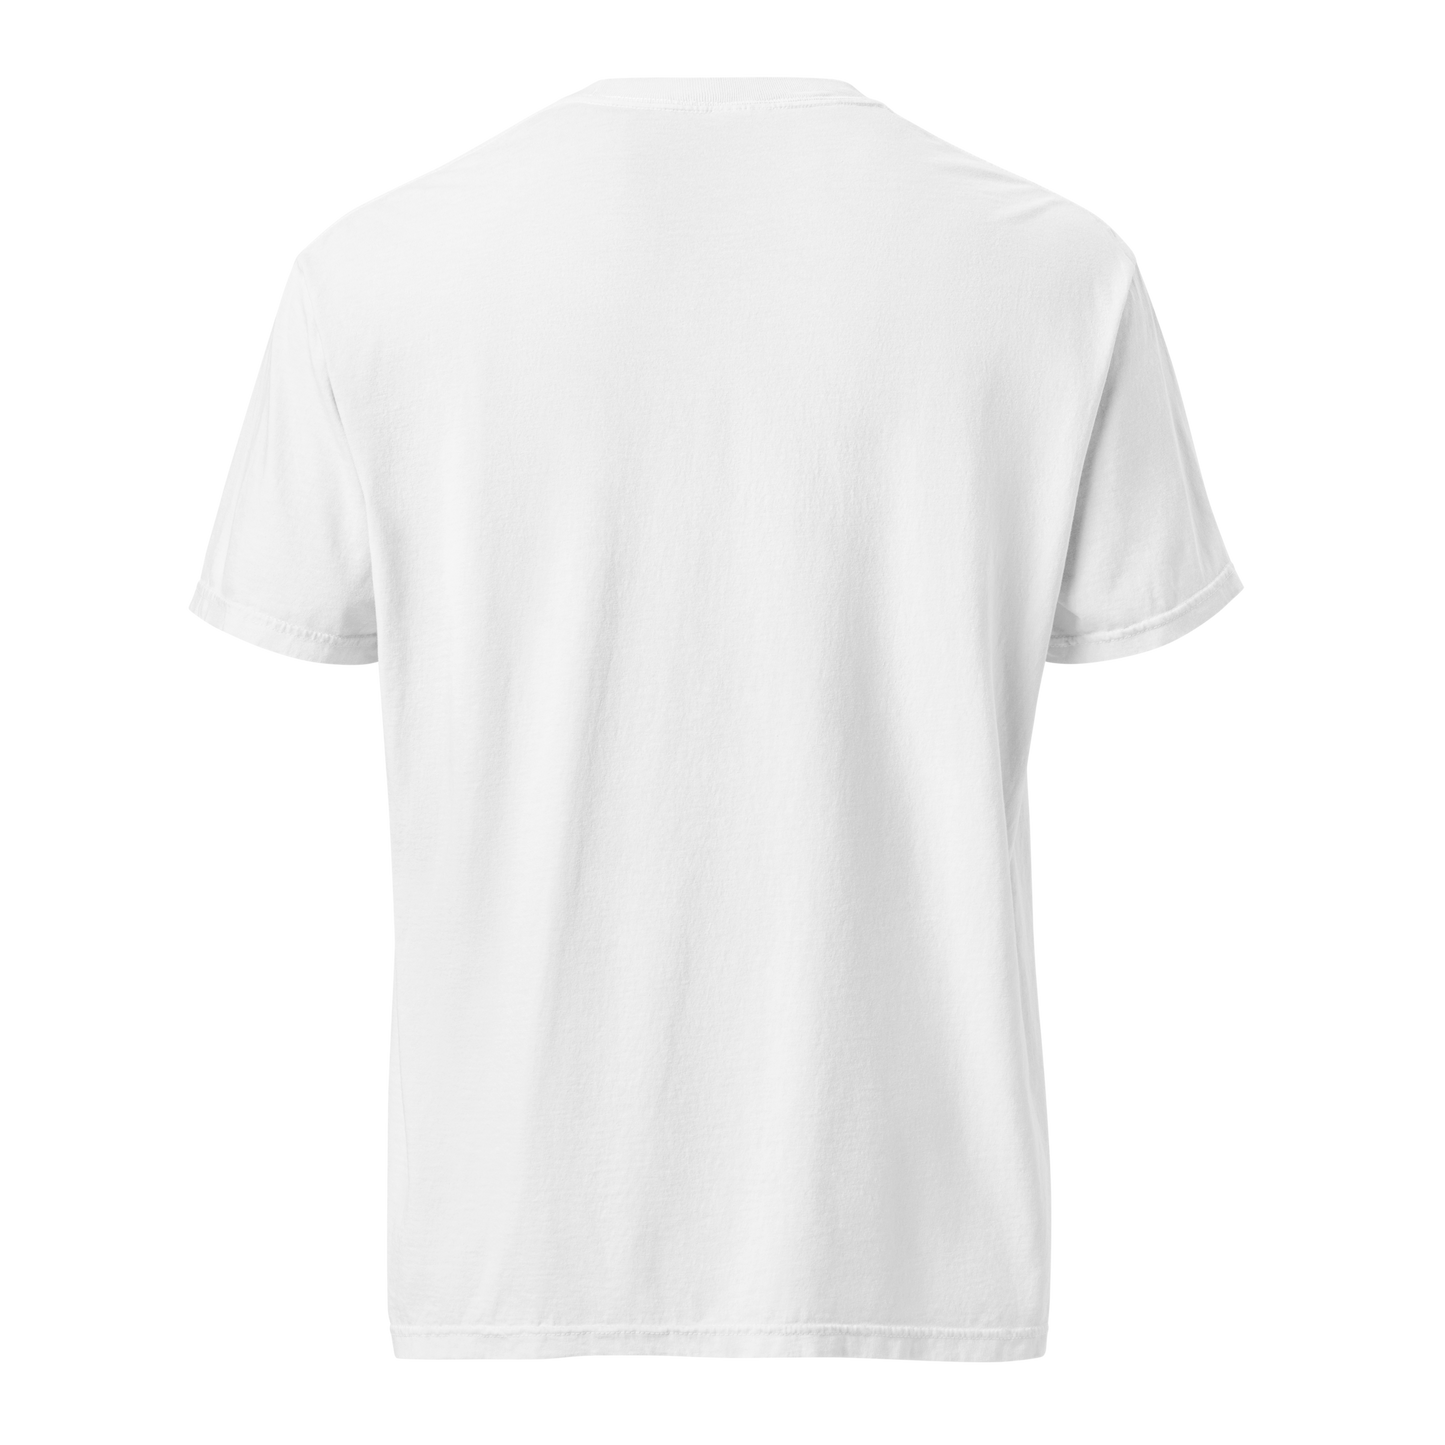 Unisex Graphic T-Shirt: Old Quarter Essence